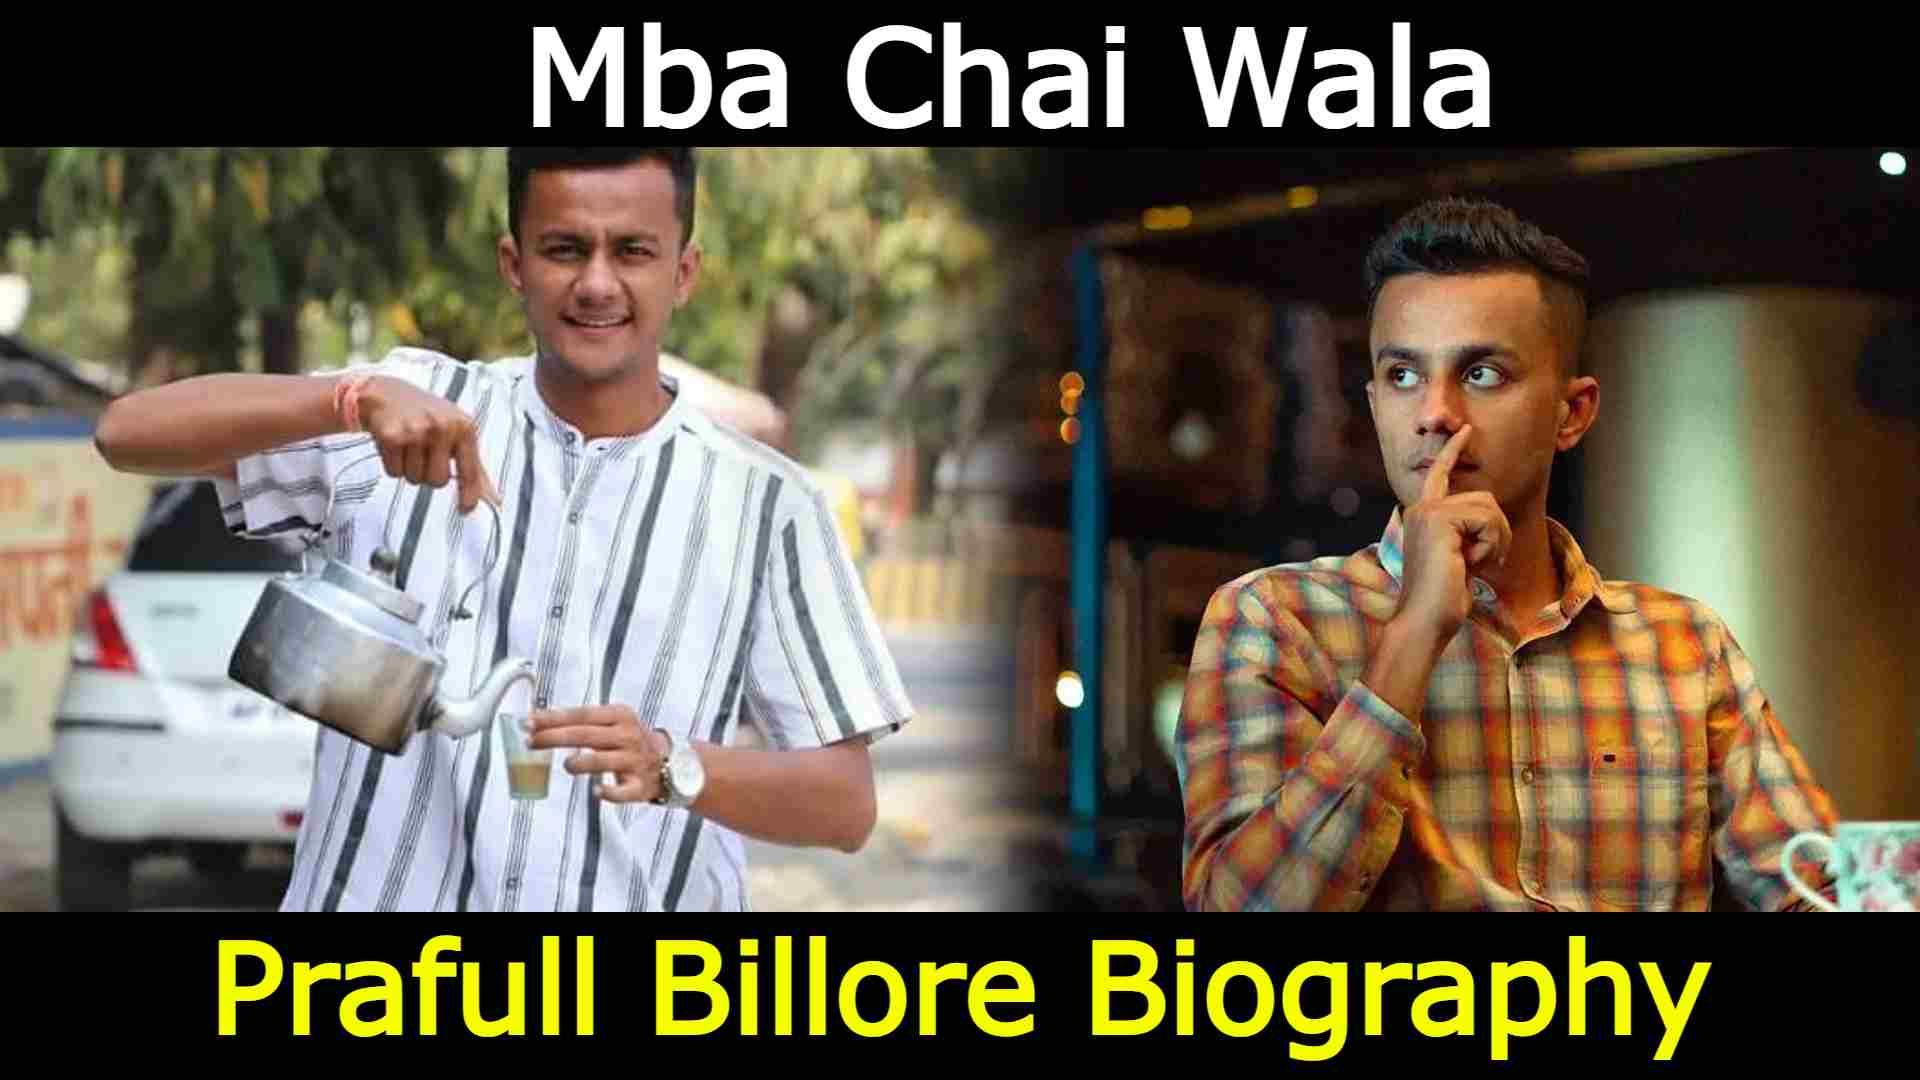 You are currently viewing Prafull Billore Bio & Wikipedia (MBA Chai Wala) !!